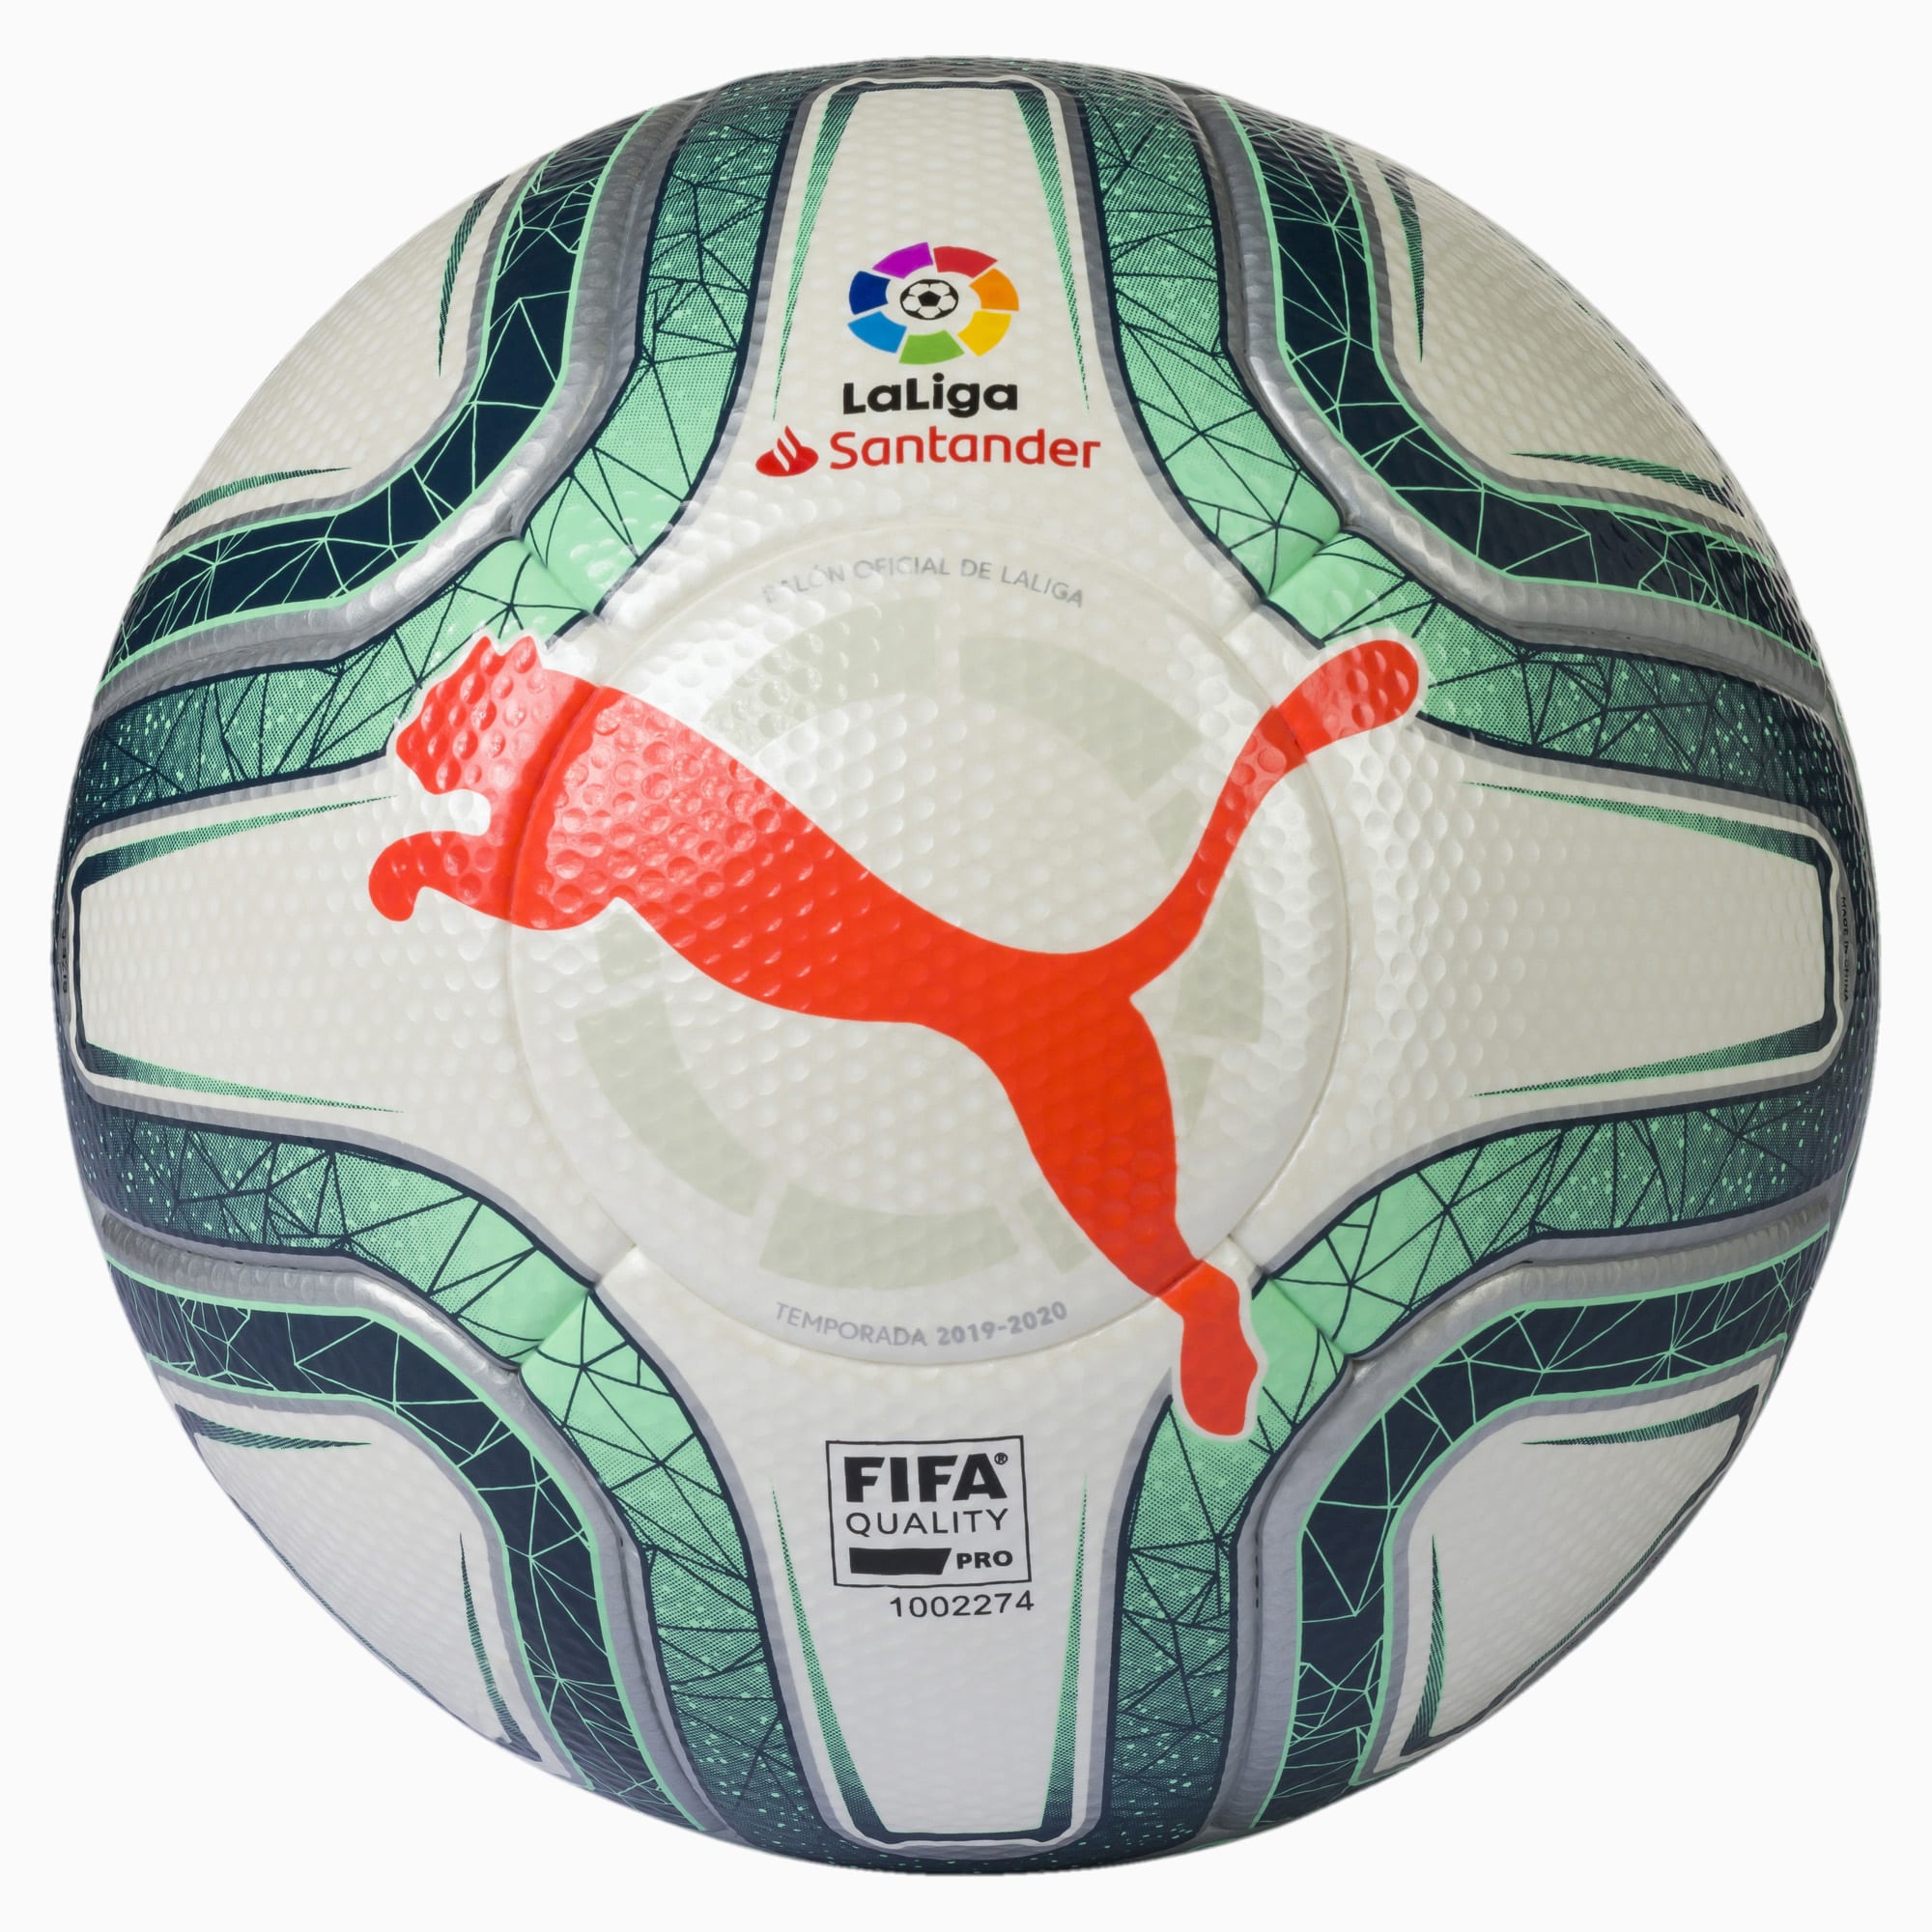 Image of PUMA LaLiga 1 FIFA Quality Pro Fußball | Mit Aucun | Weiß/Grün/Rot | Größe: 5